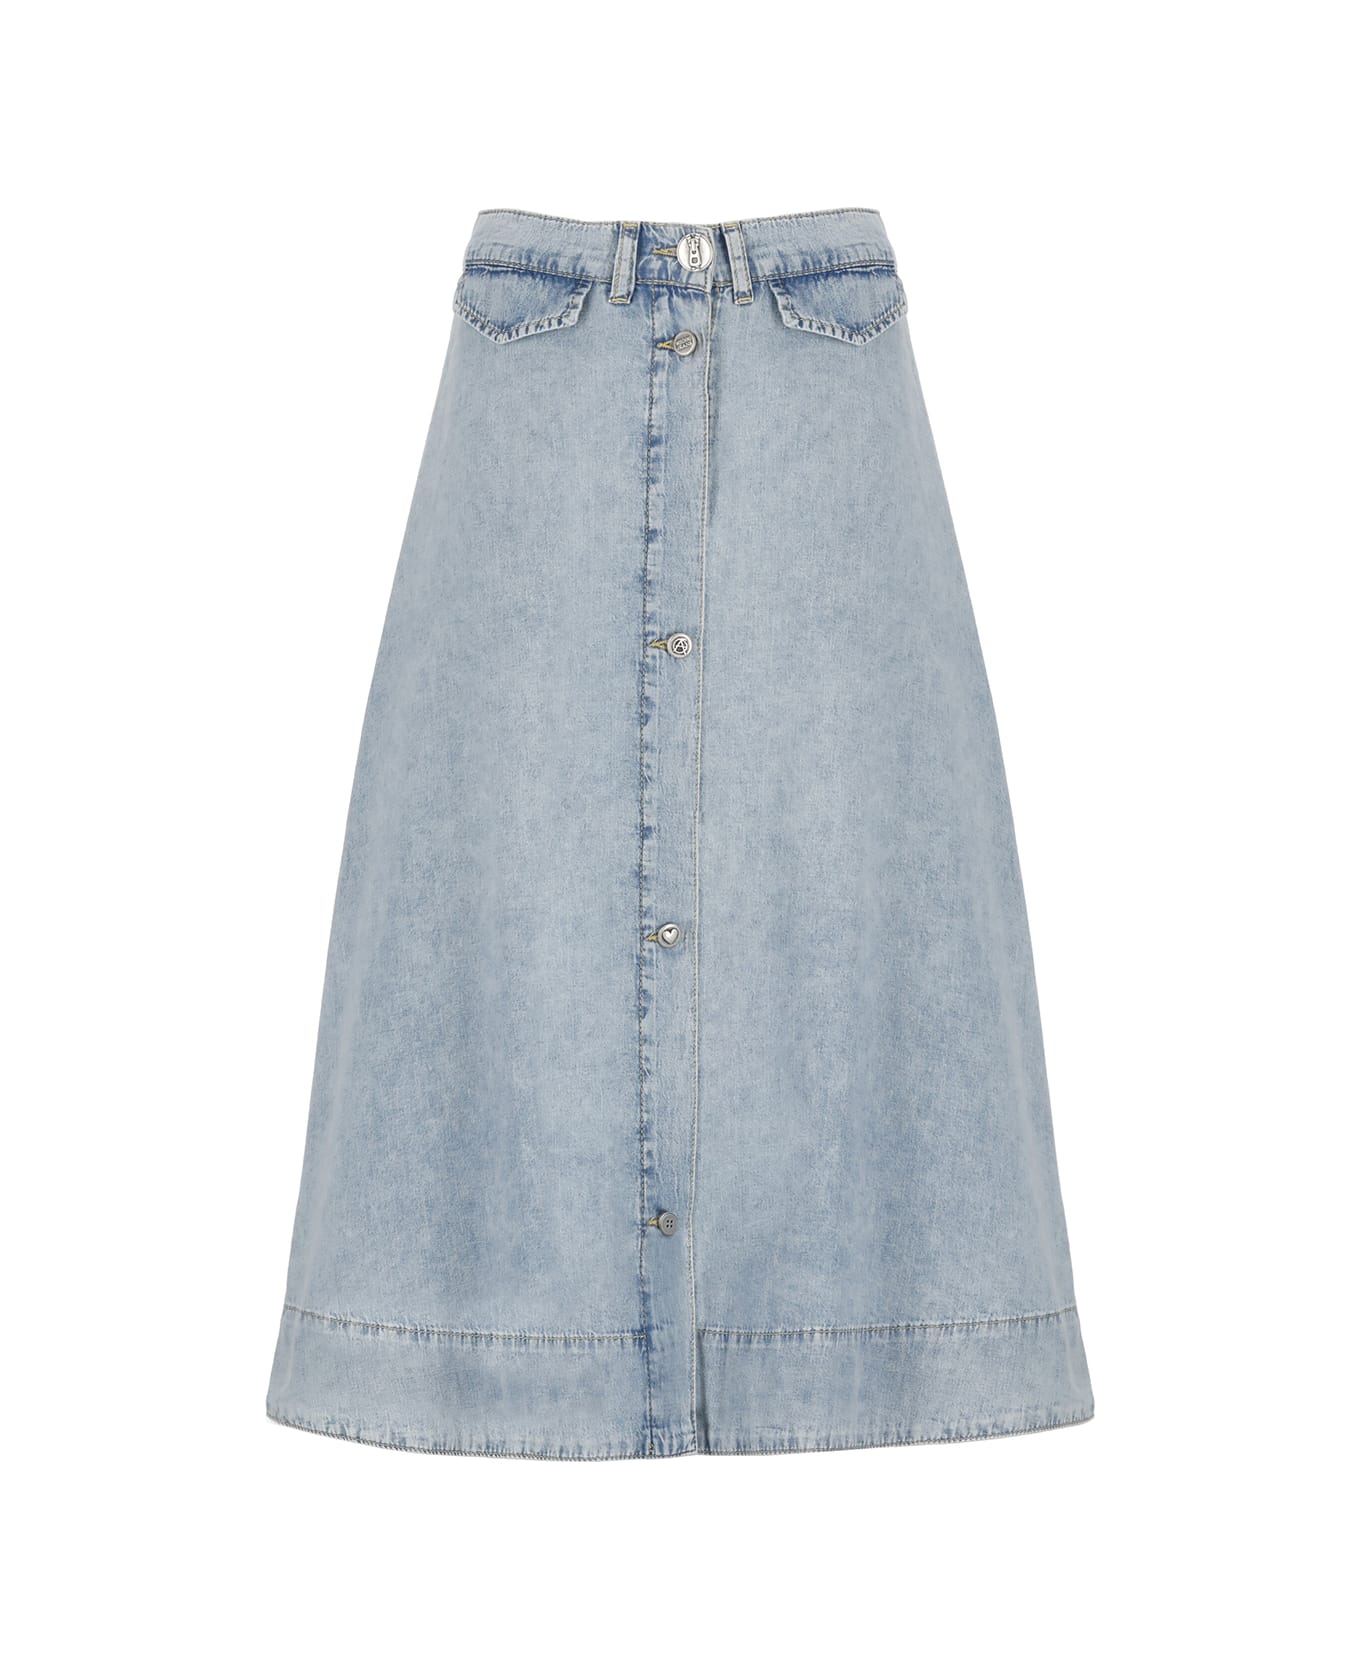 M05CH1N0 Jeans Cotton Skirt - Light Blue